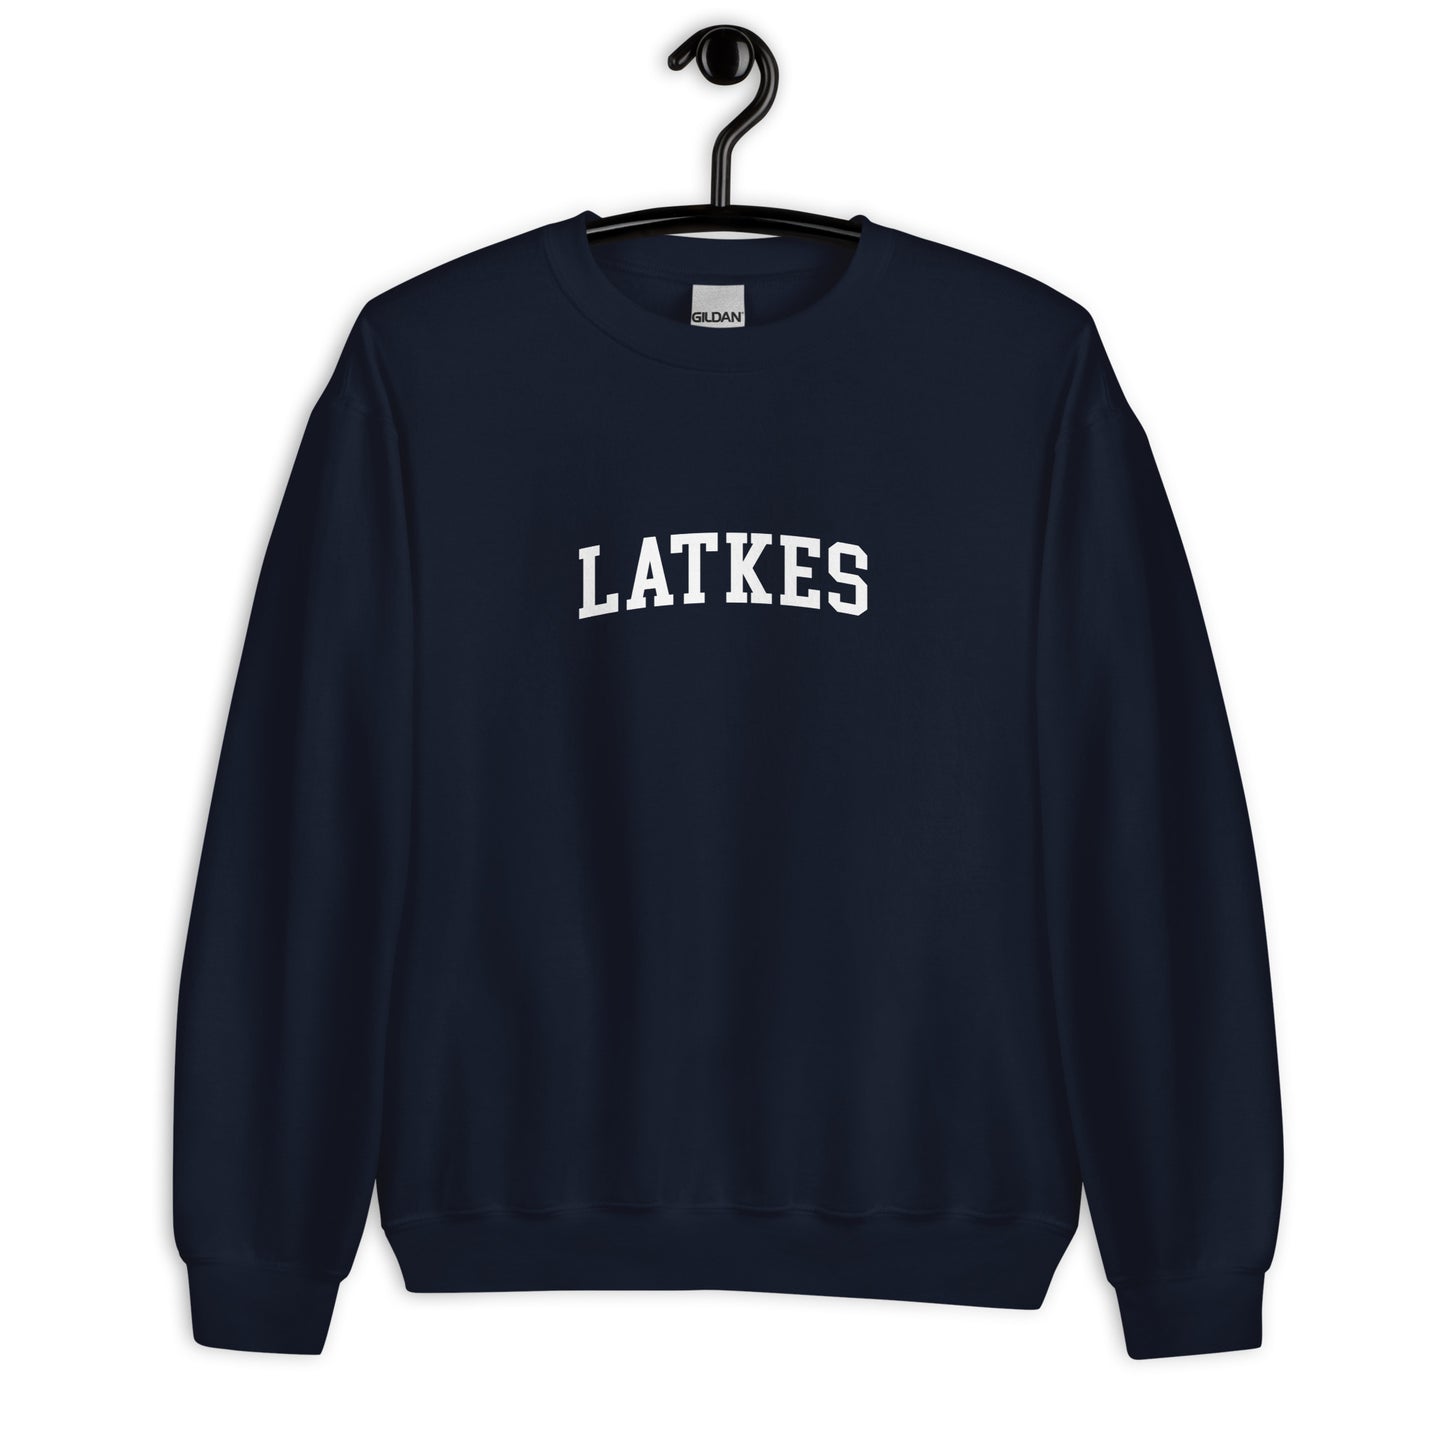 Latkes Sweatshirt - Arched Font